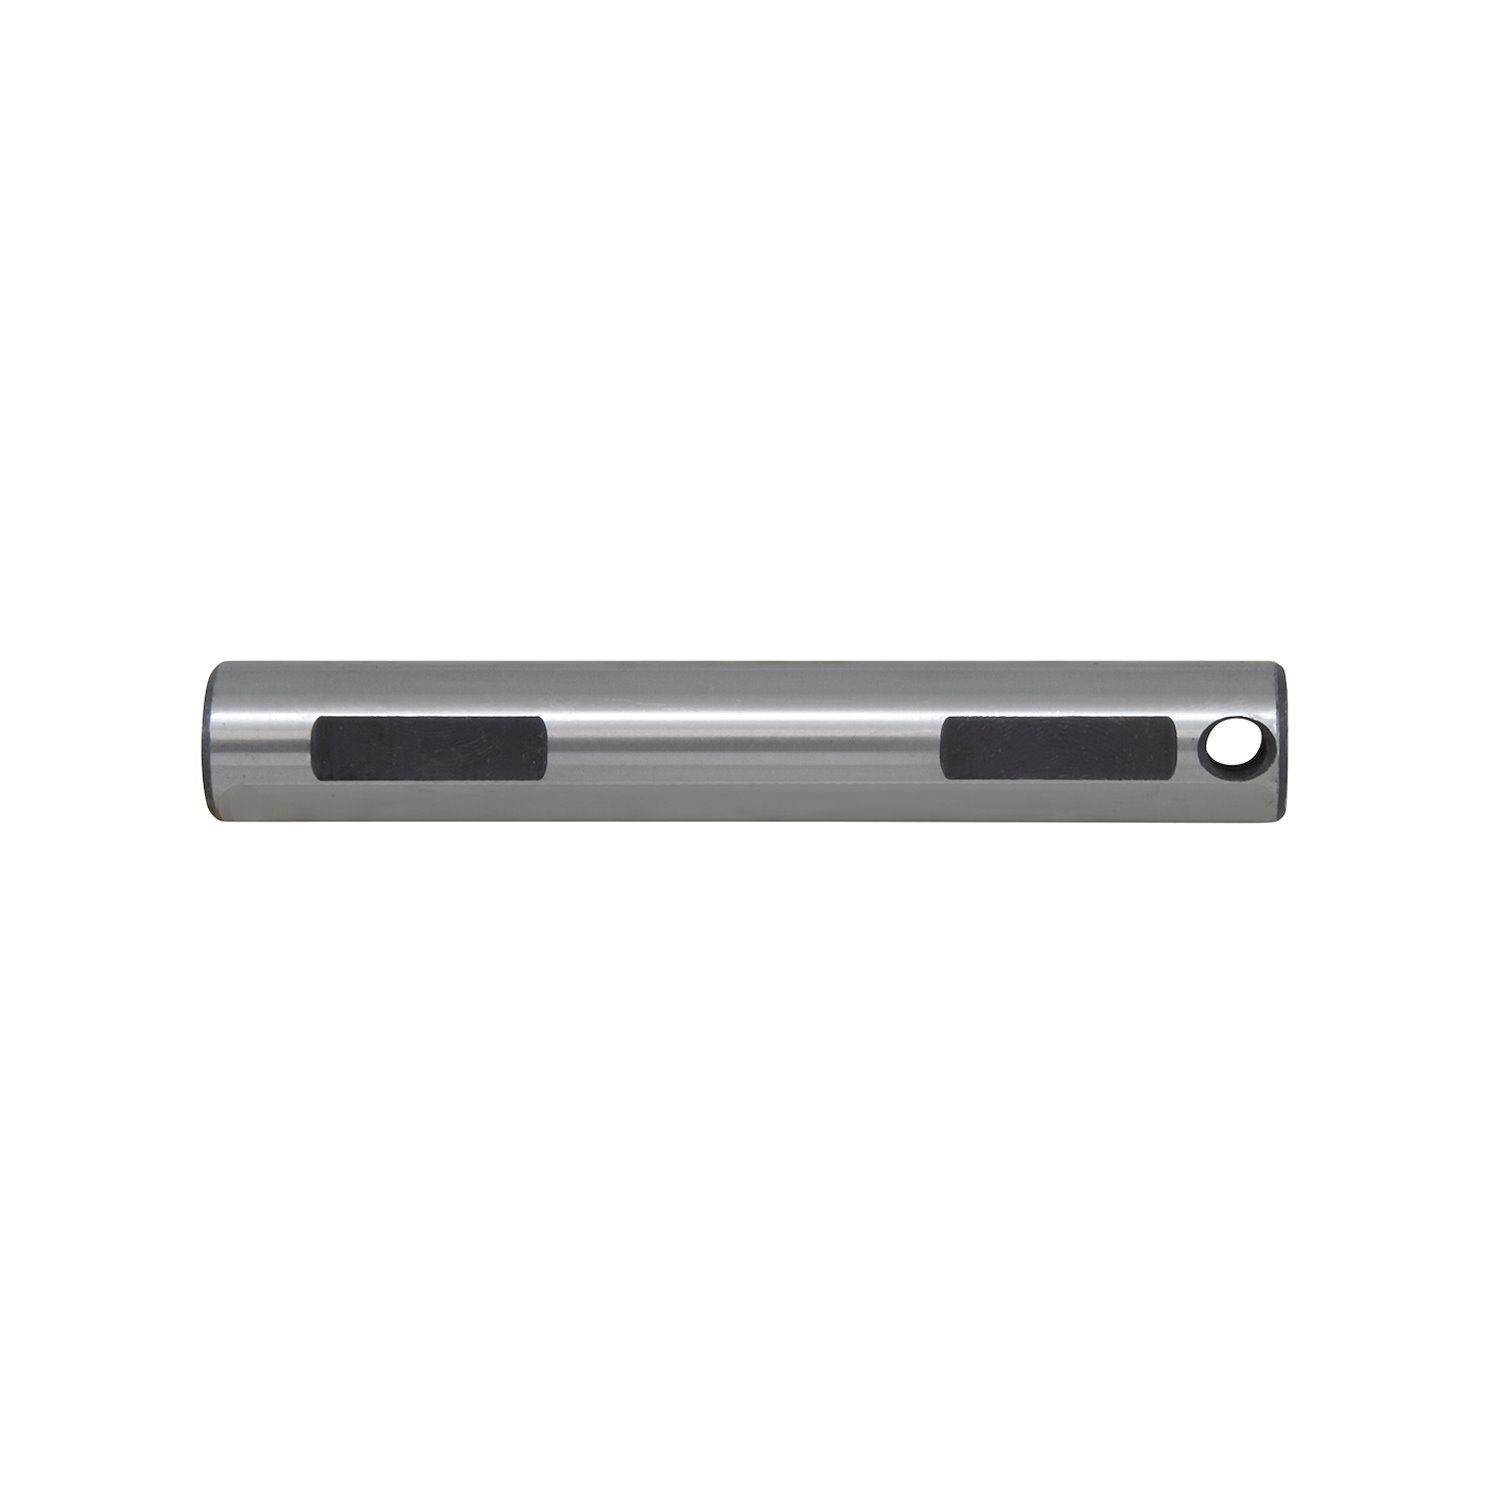 Chrome Moly Cross Pin Shaft For Mini-Spool For